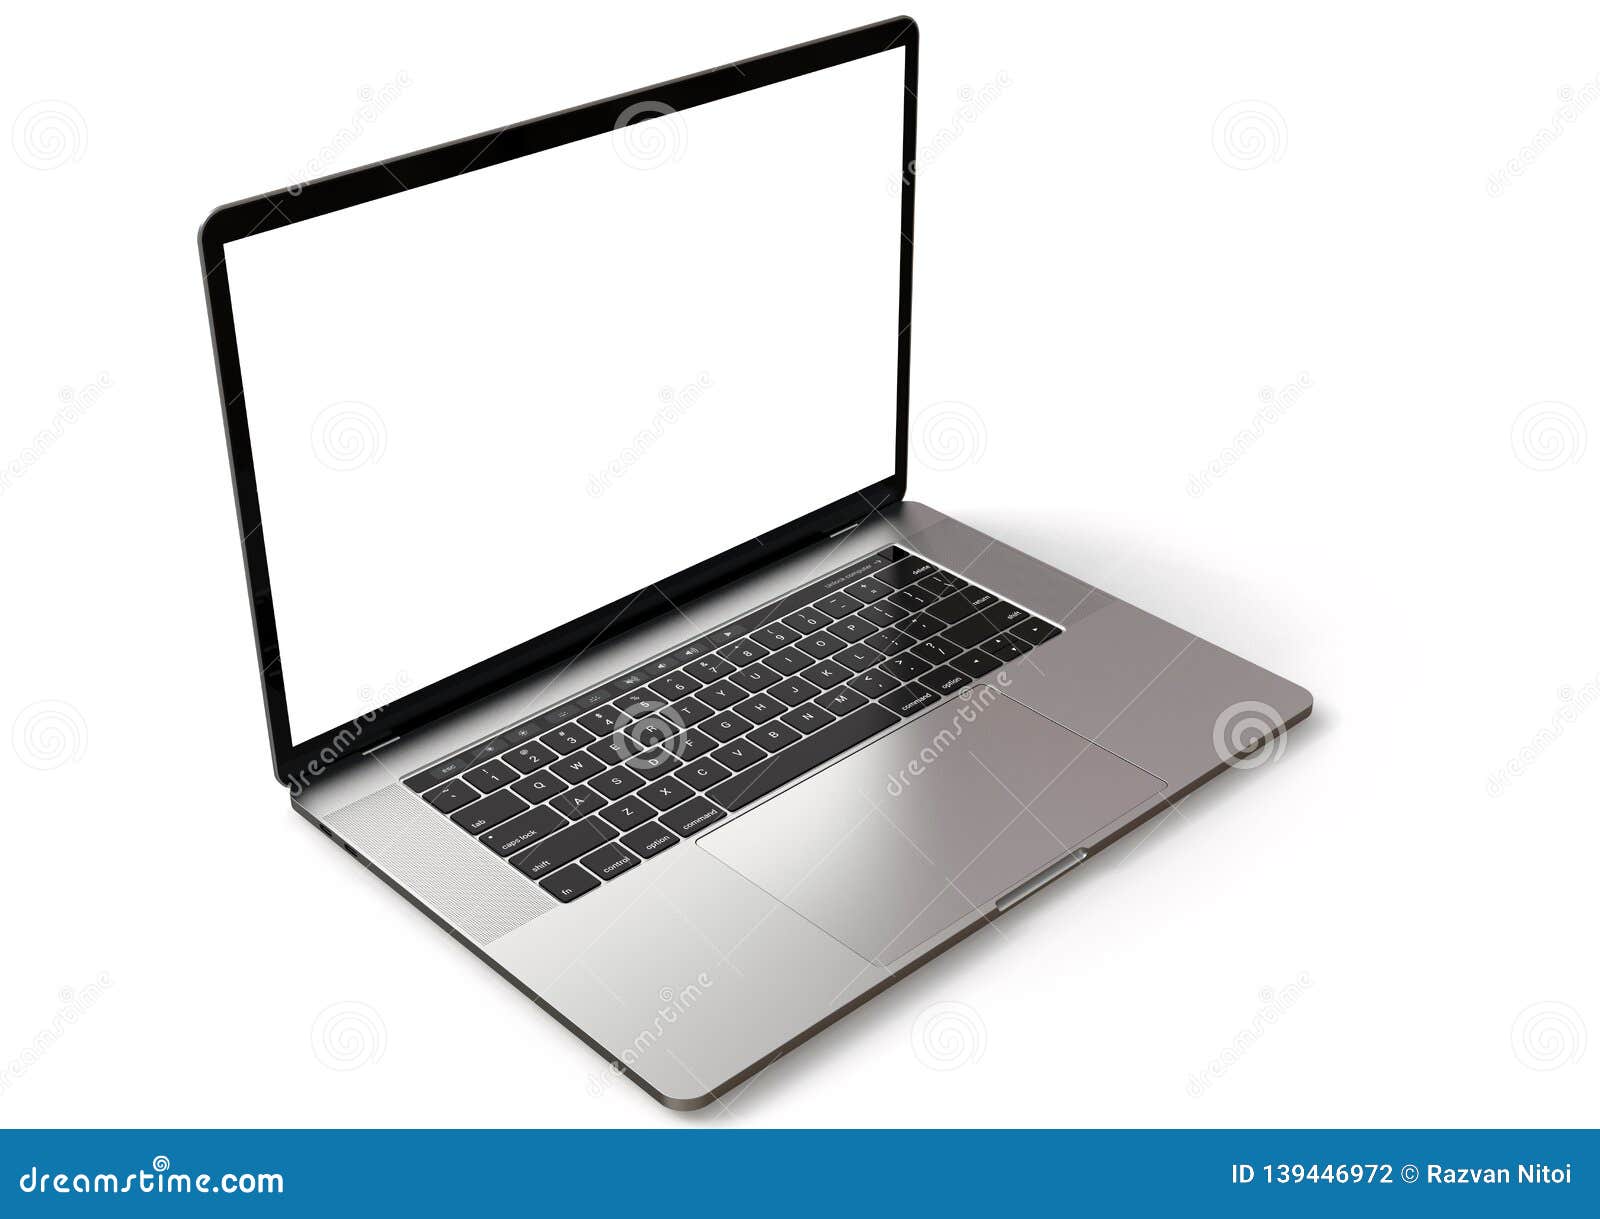 macbook pro silver similar laptop computer, front view